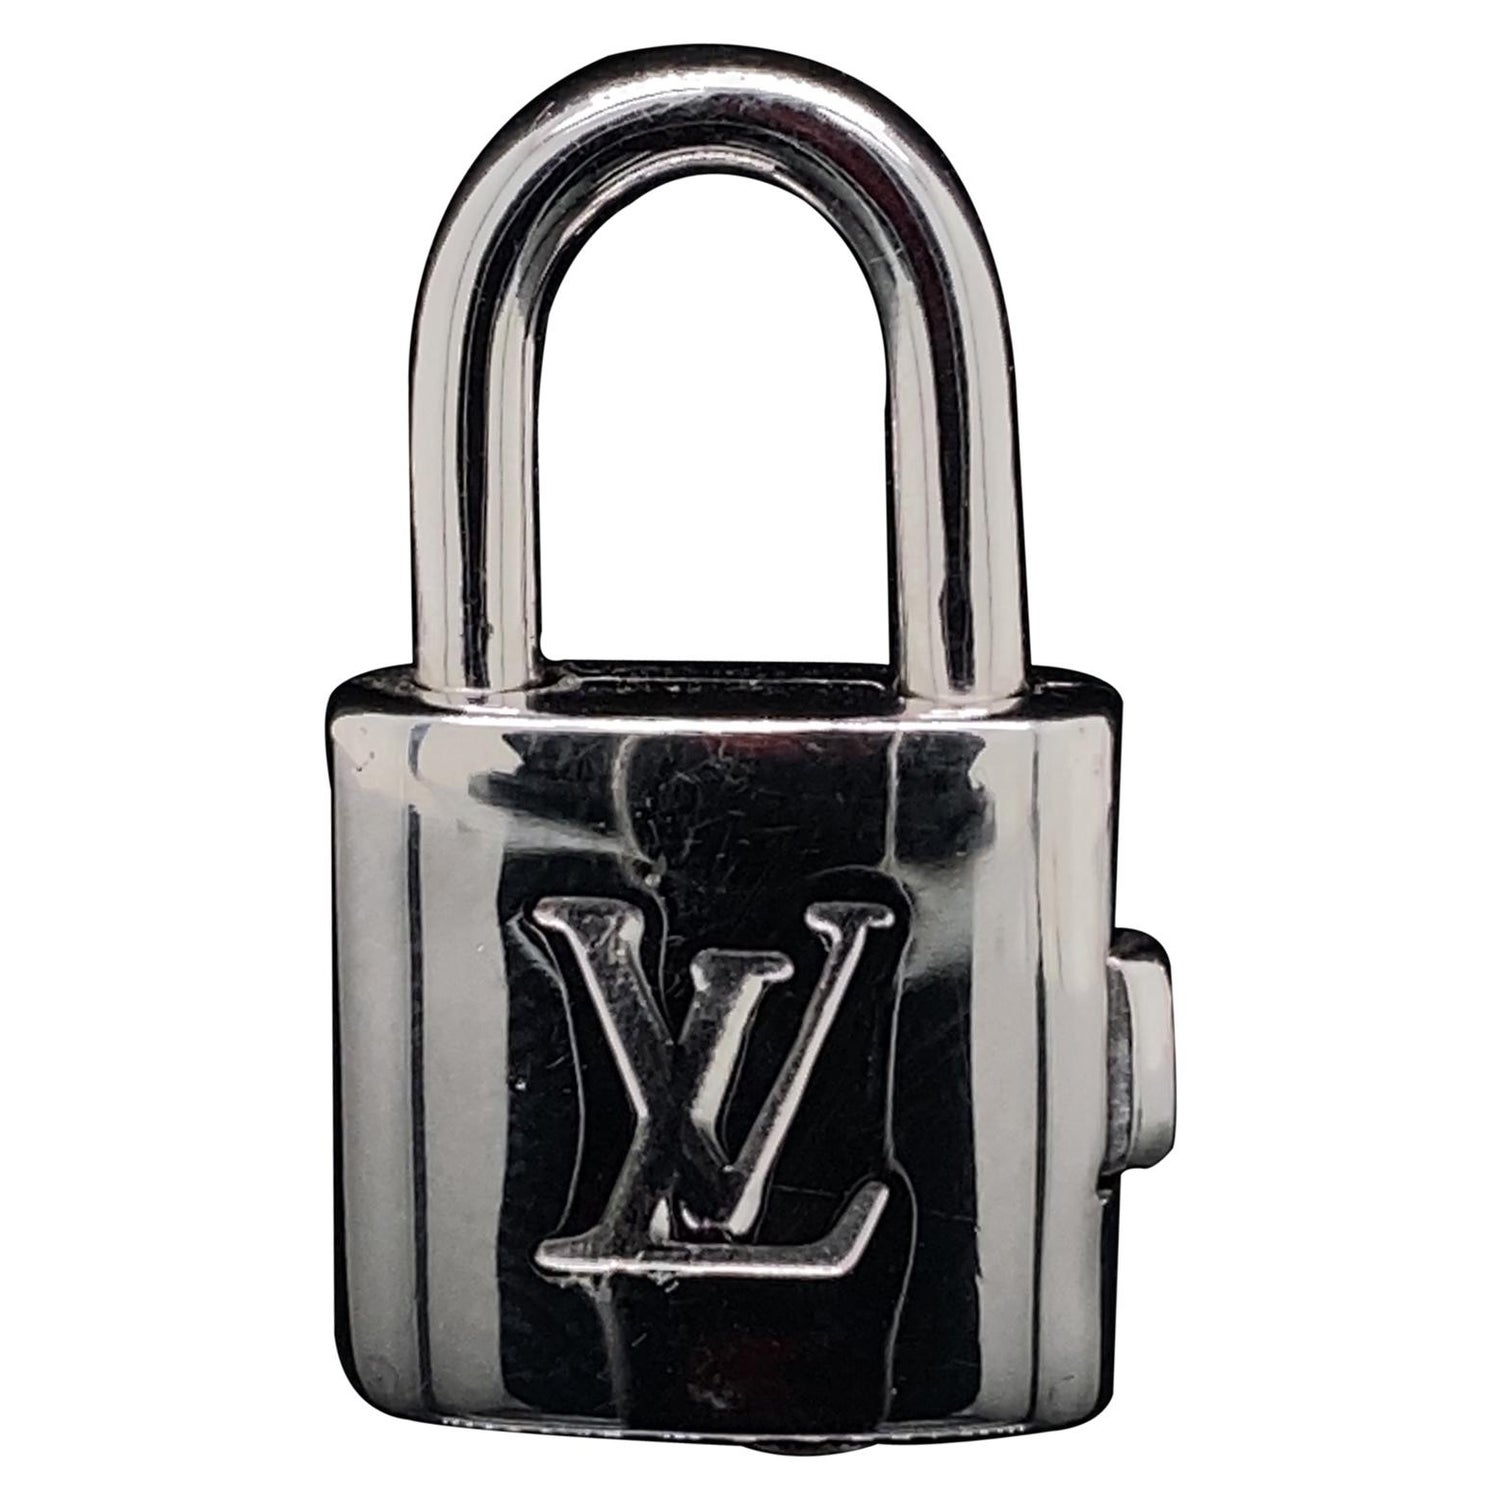 Louis Vuitton Lockit Bag Padlock, White Gold and Diamonds Grey. Size NSA